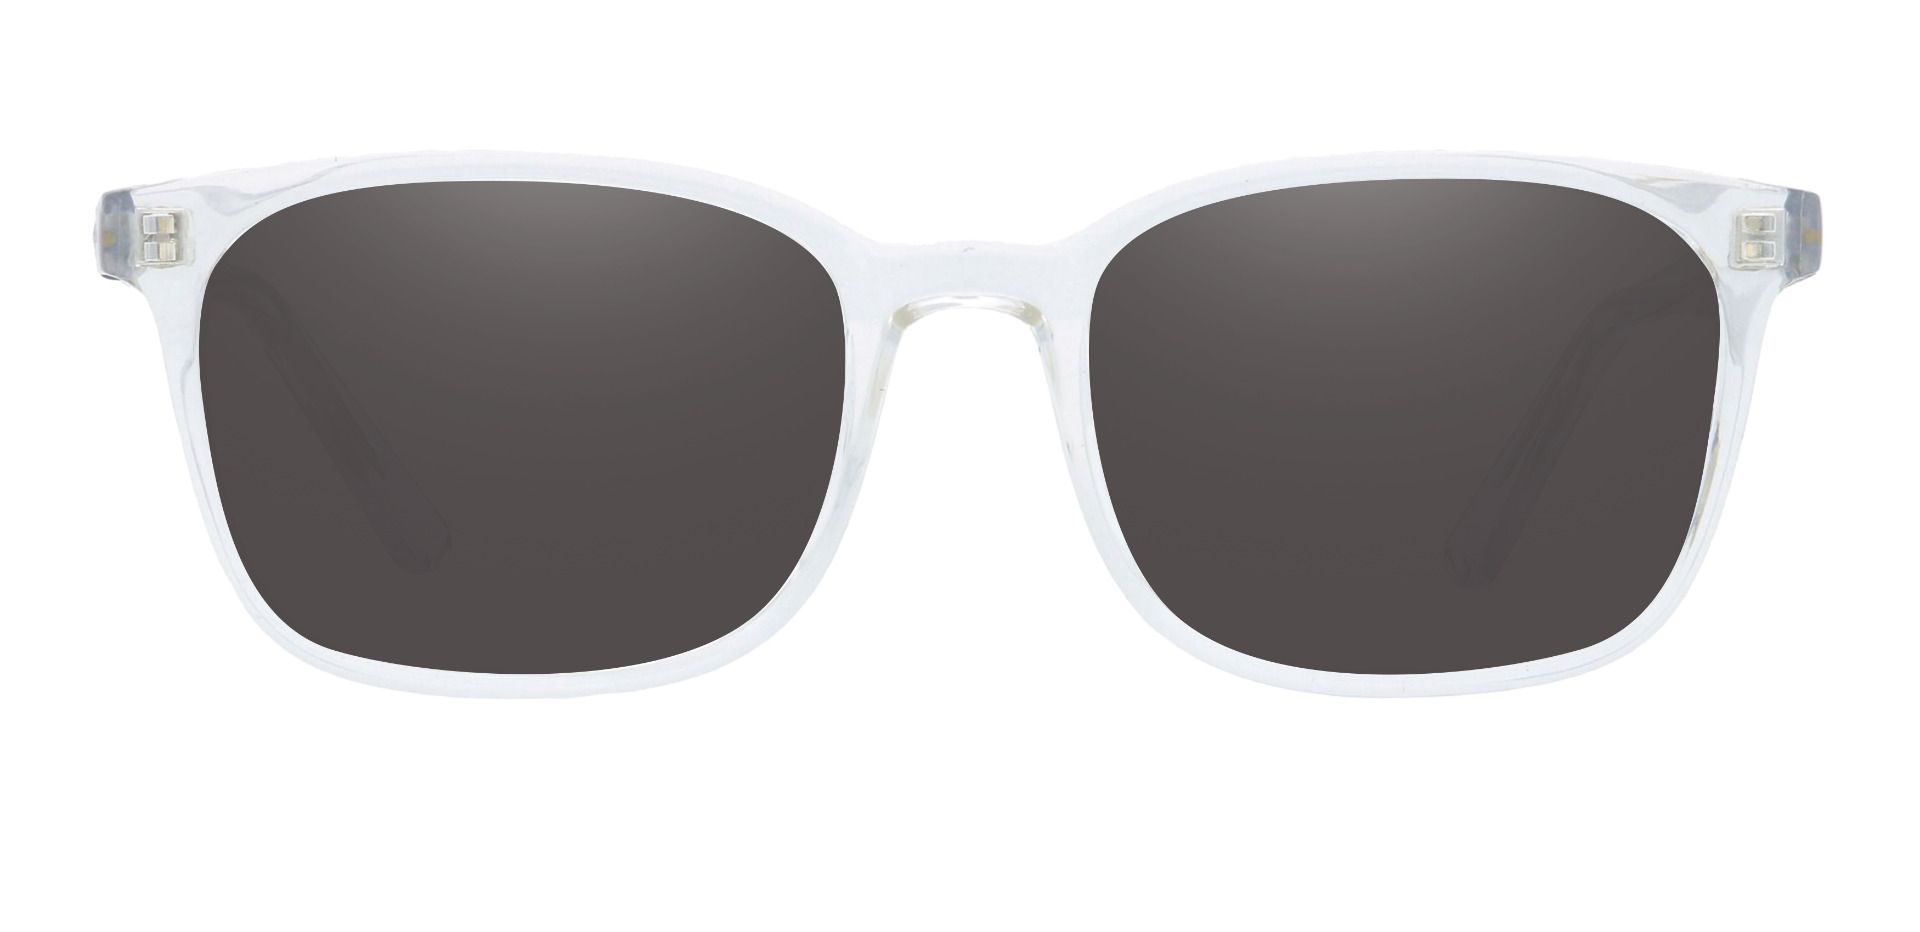 Windsor Rectangle Prescription Sunglasses - Clear Frame With Gray Lenses